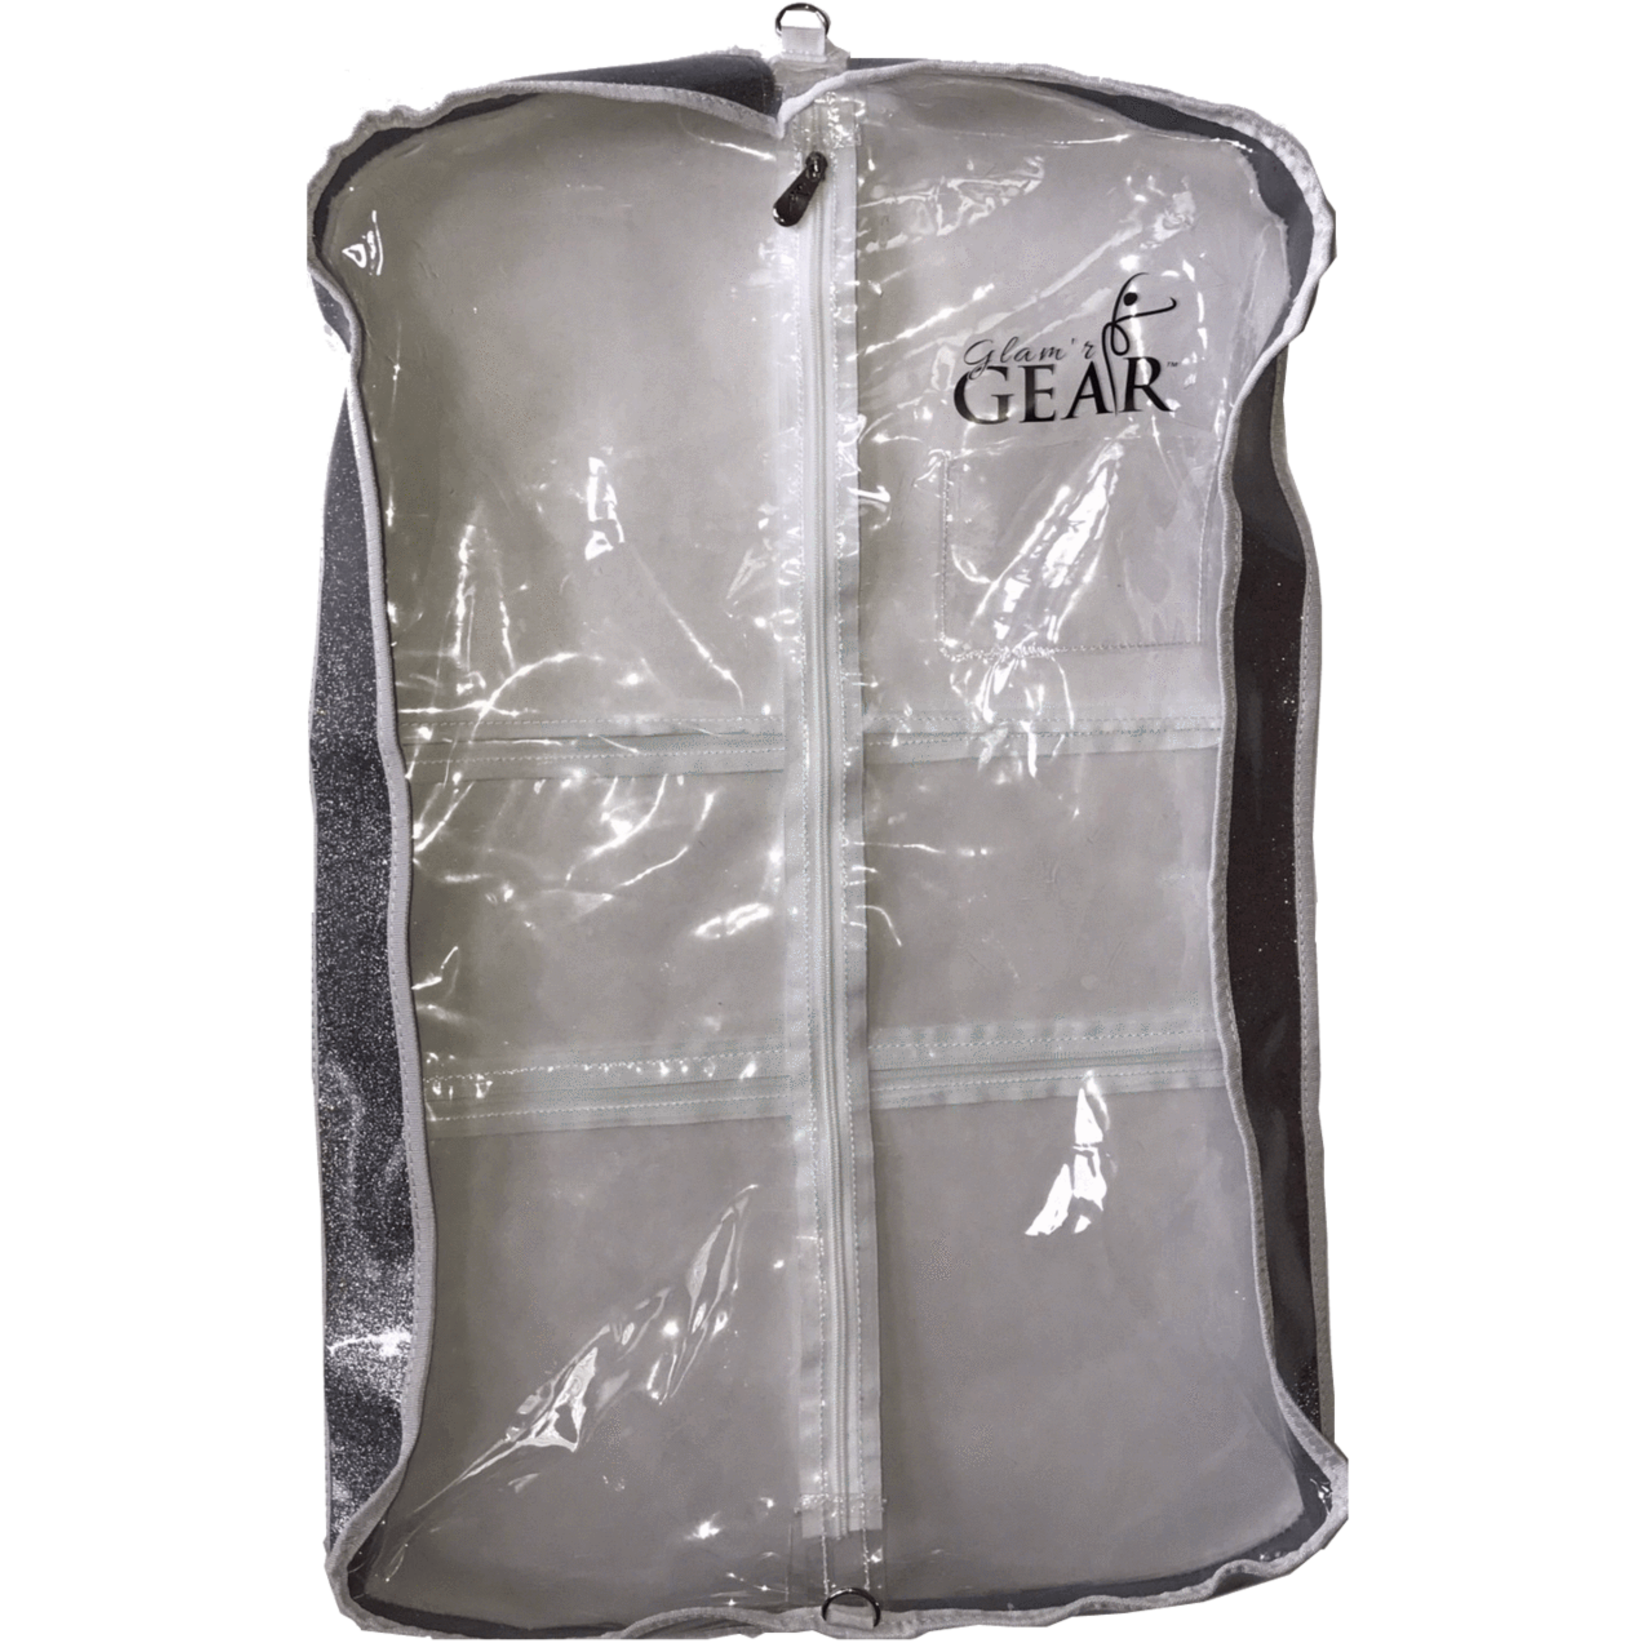 Glam’r Gear Glam’r Gear Garment Bag, 2” Gusset, Long